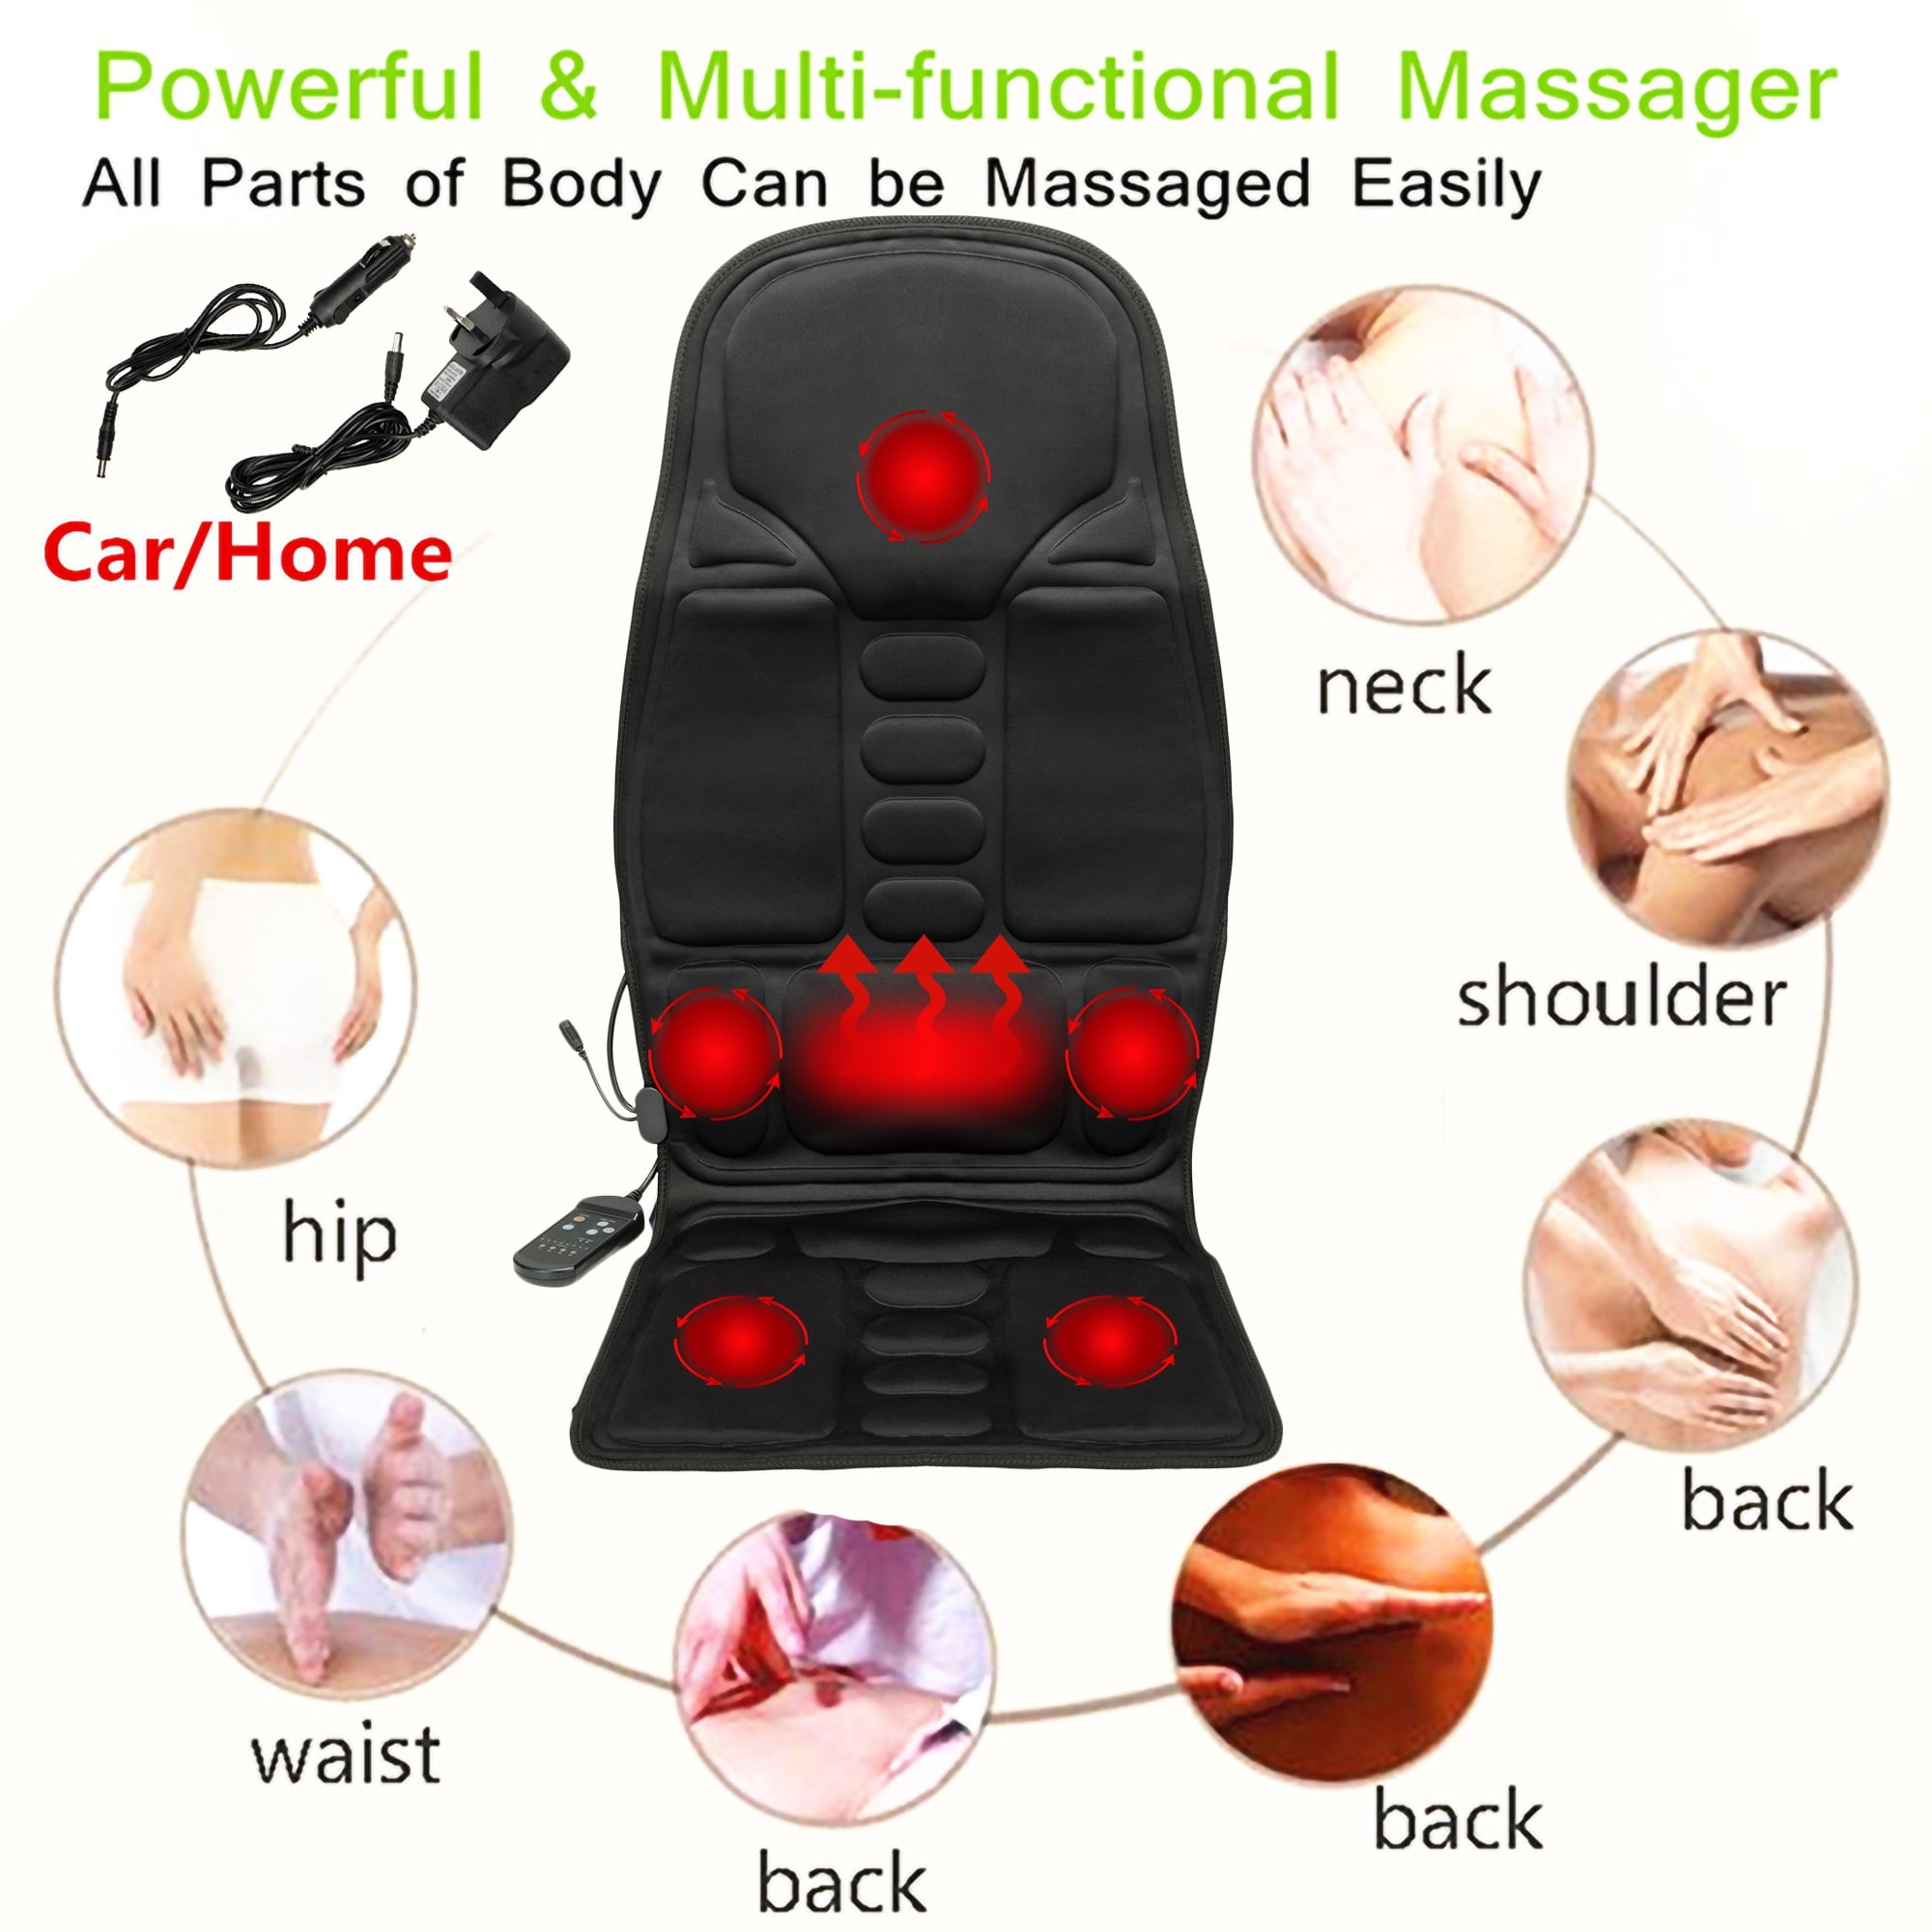 Carshion Vibration Back Massager with Heat, 5 Vibrating Motors and 2 Heat  Levels, Massage Seat Cushi…See more Carshion Vibration Back Massager with